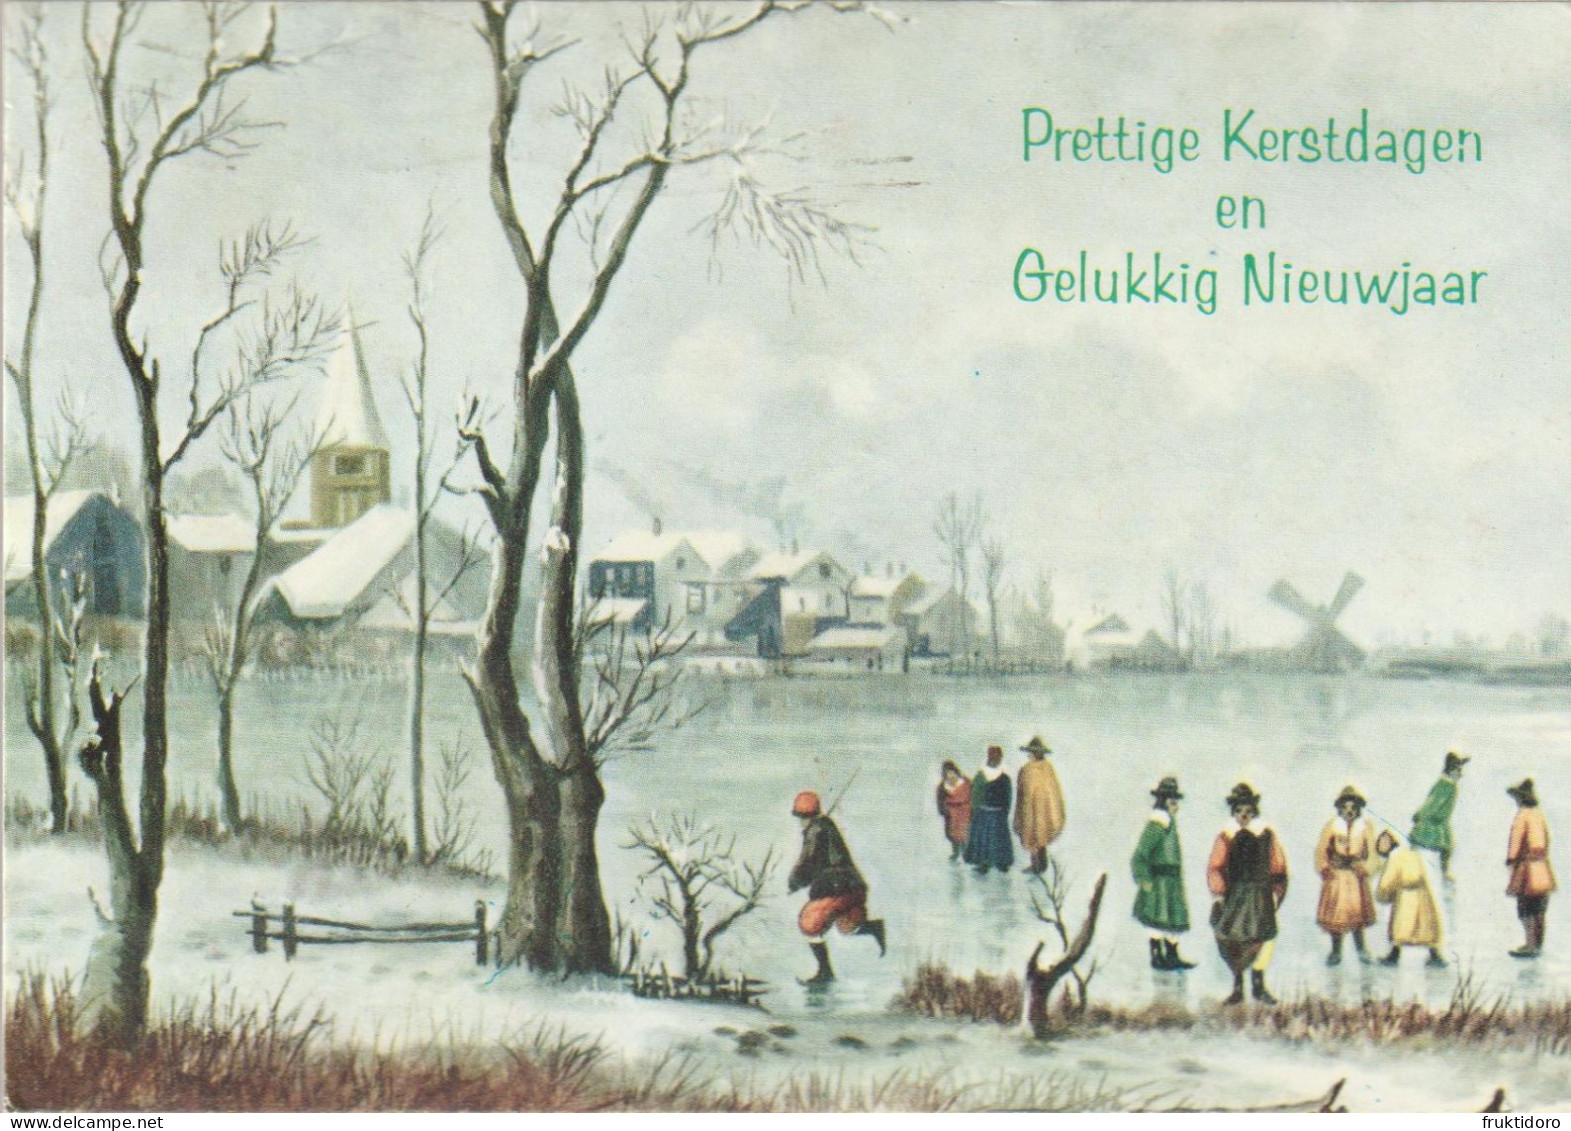 CCNL The Netherlands Christmas Cards - Candles - White Fir - Nuts - Shepherds - Snow - Bridge - Munttoren in Amsterdam